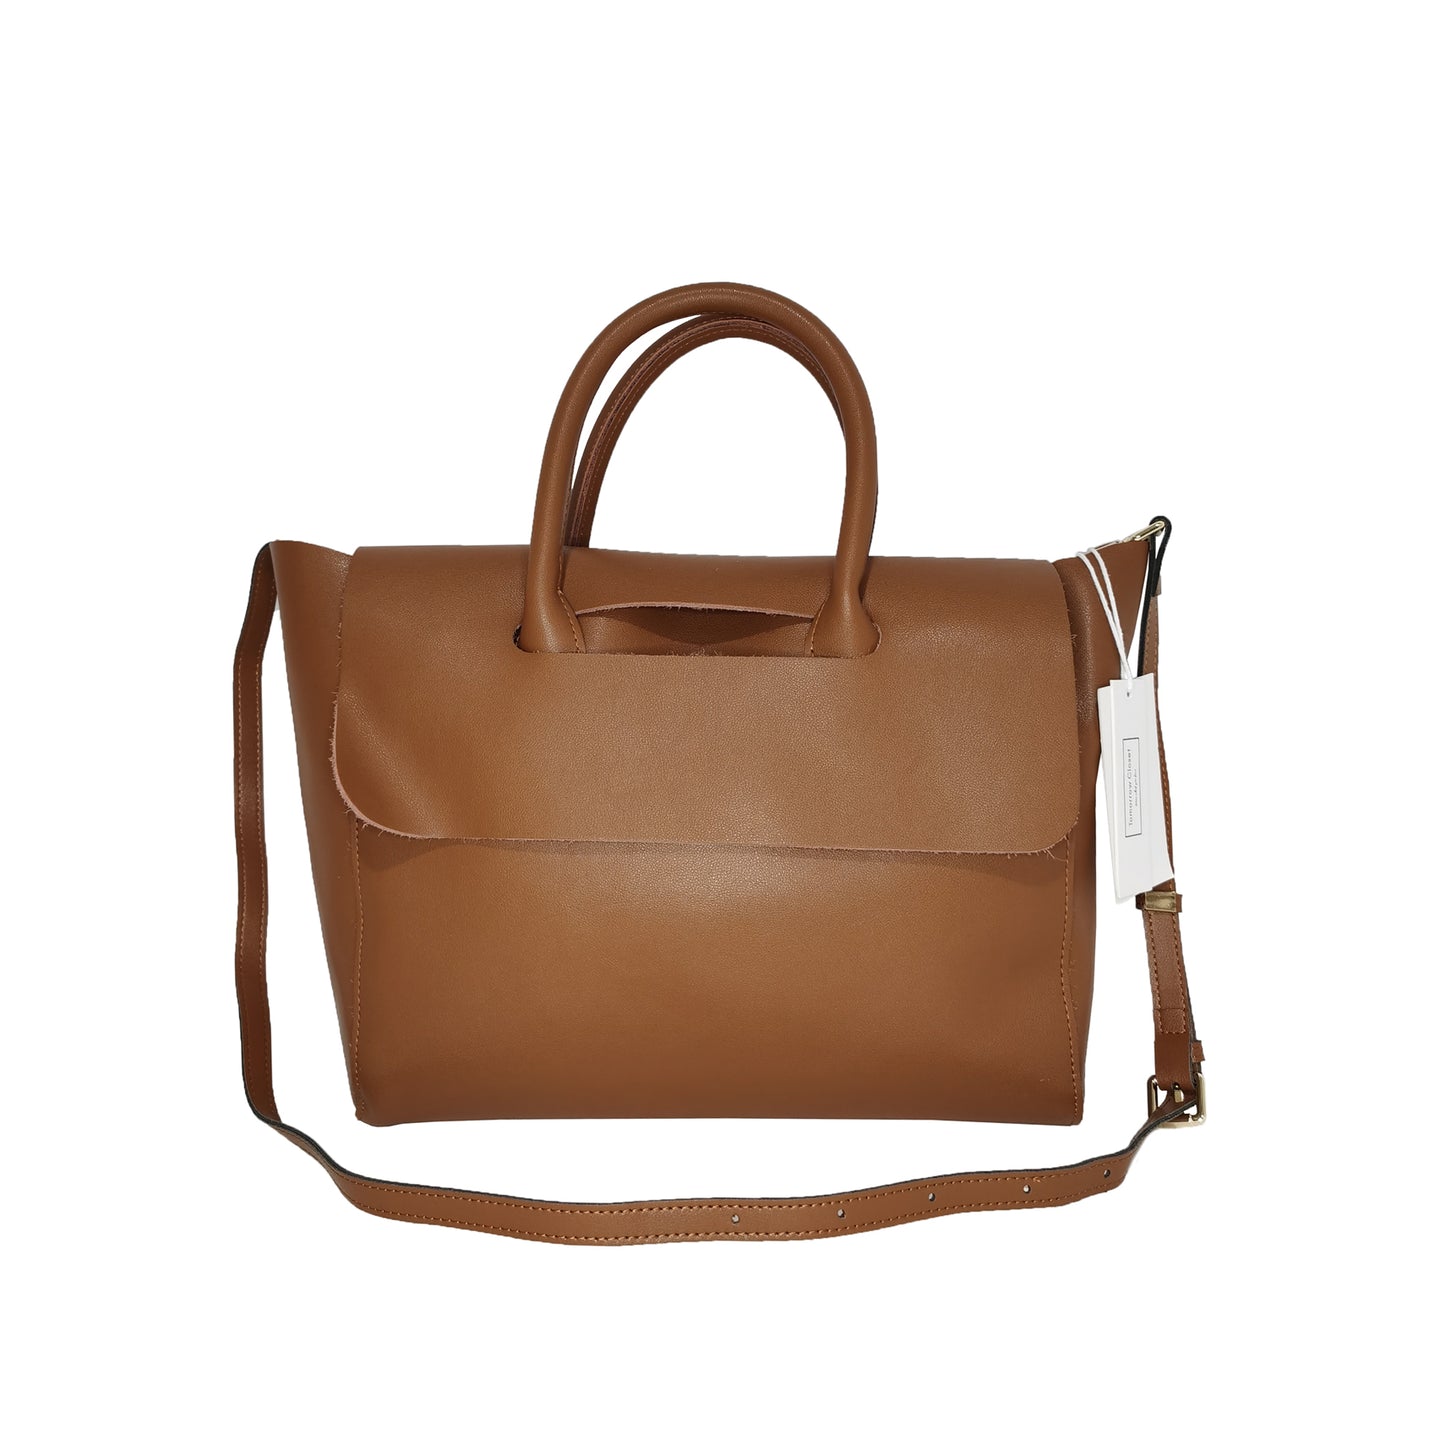 Women's genuine cowhide leather handbag nodel design by Tomorrow Closet